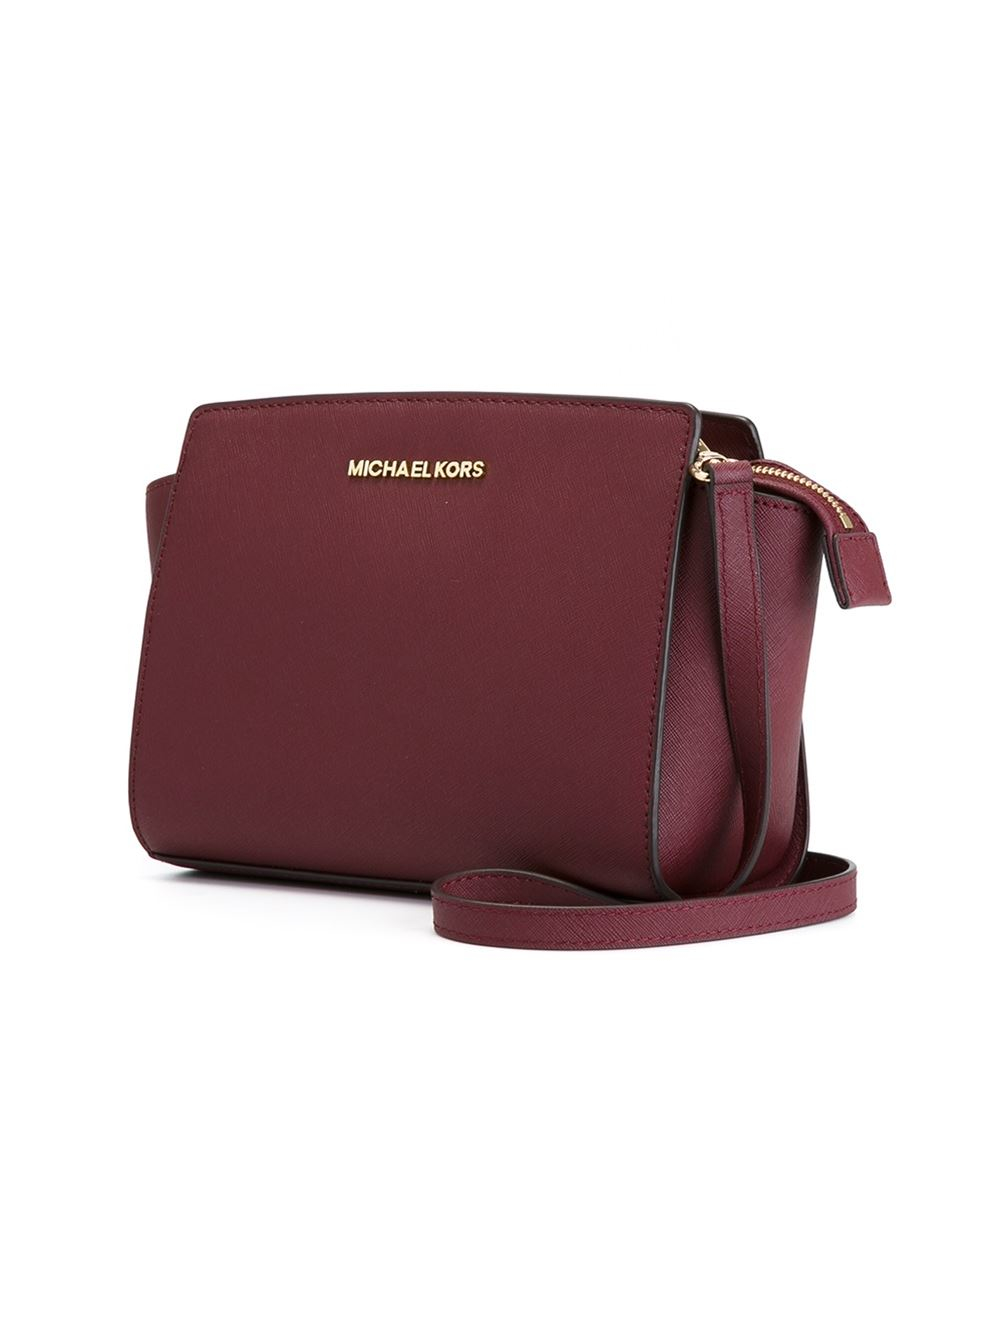 Michael Kors Extra Small Leather Crossbody Bag Purse Messenger Handbag Pink